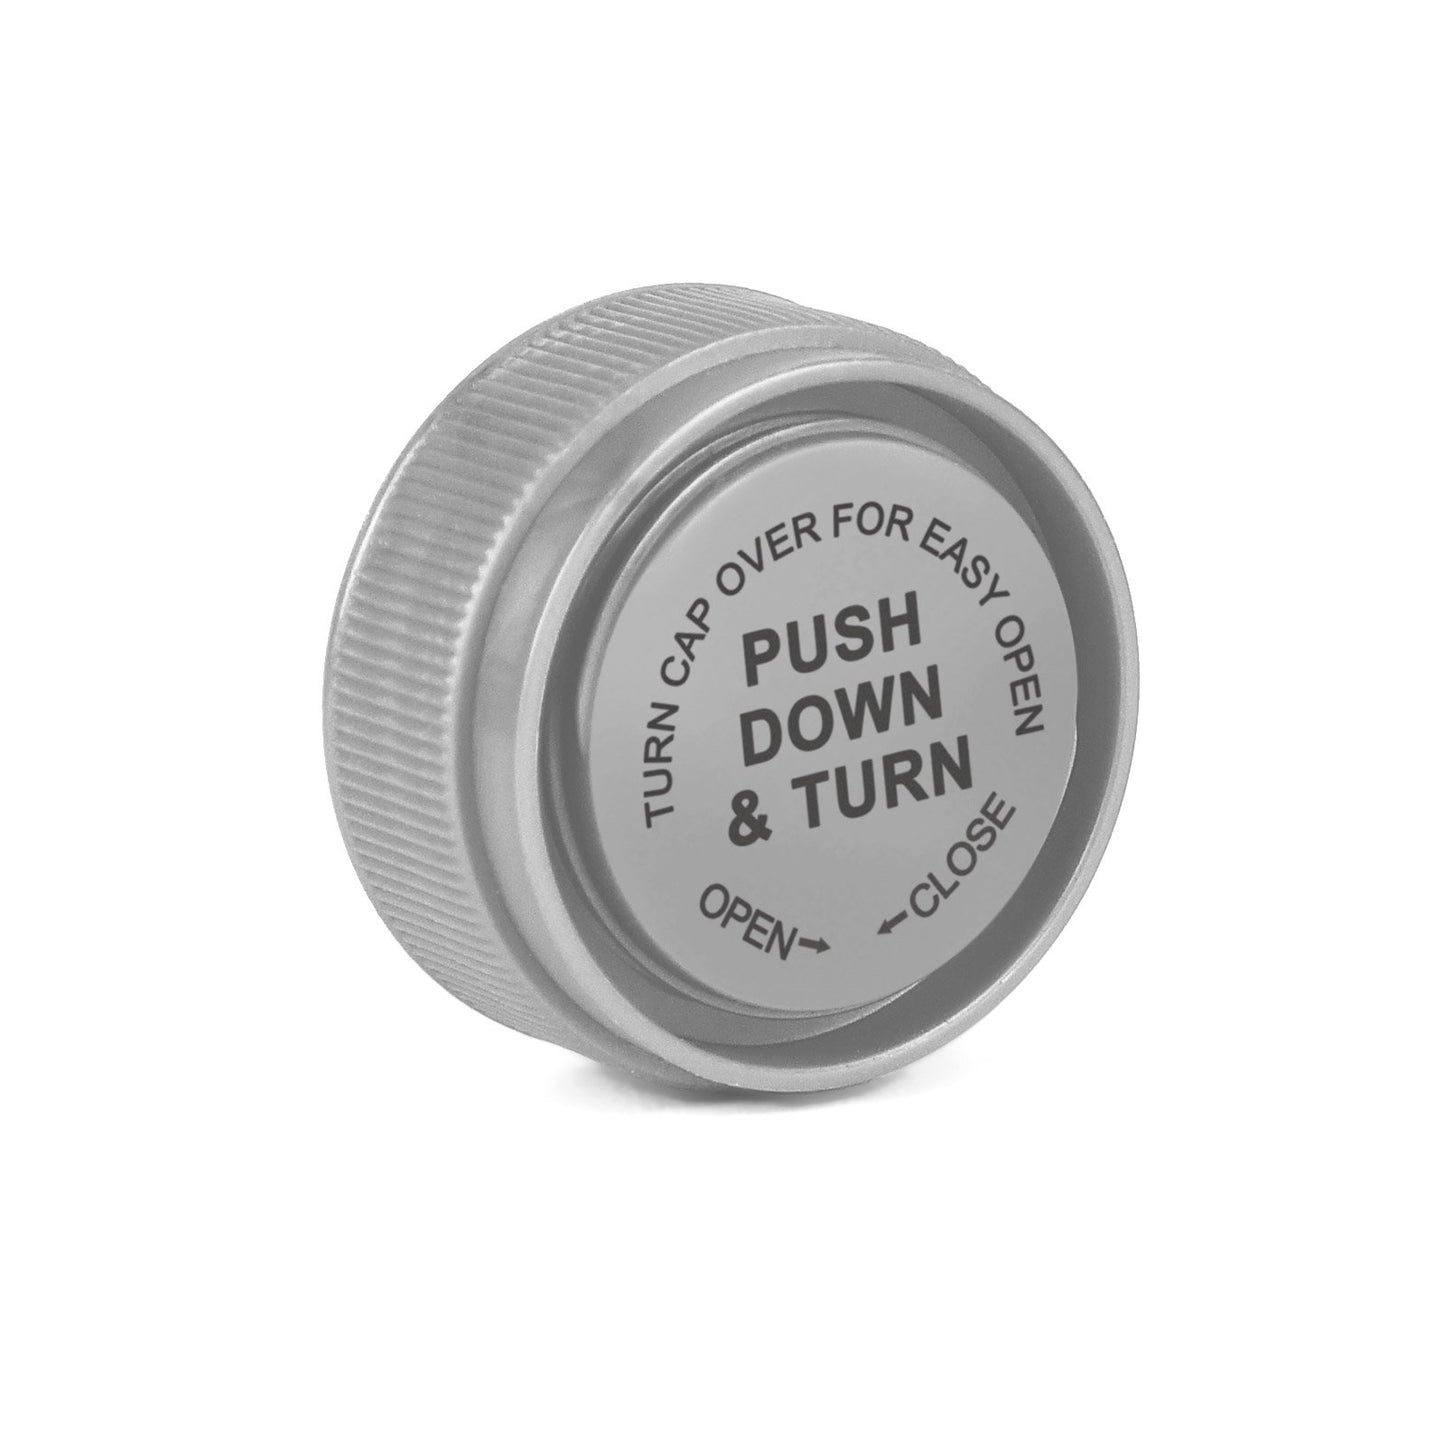 13 Dram Push Down & Turn Cap Opaque Silver 275 COUNT